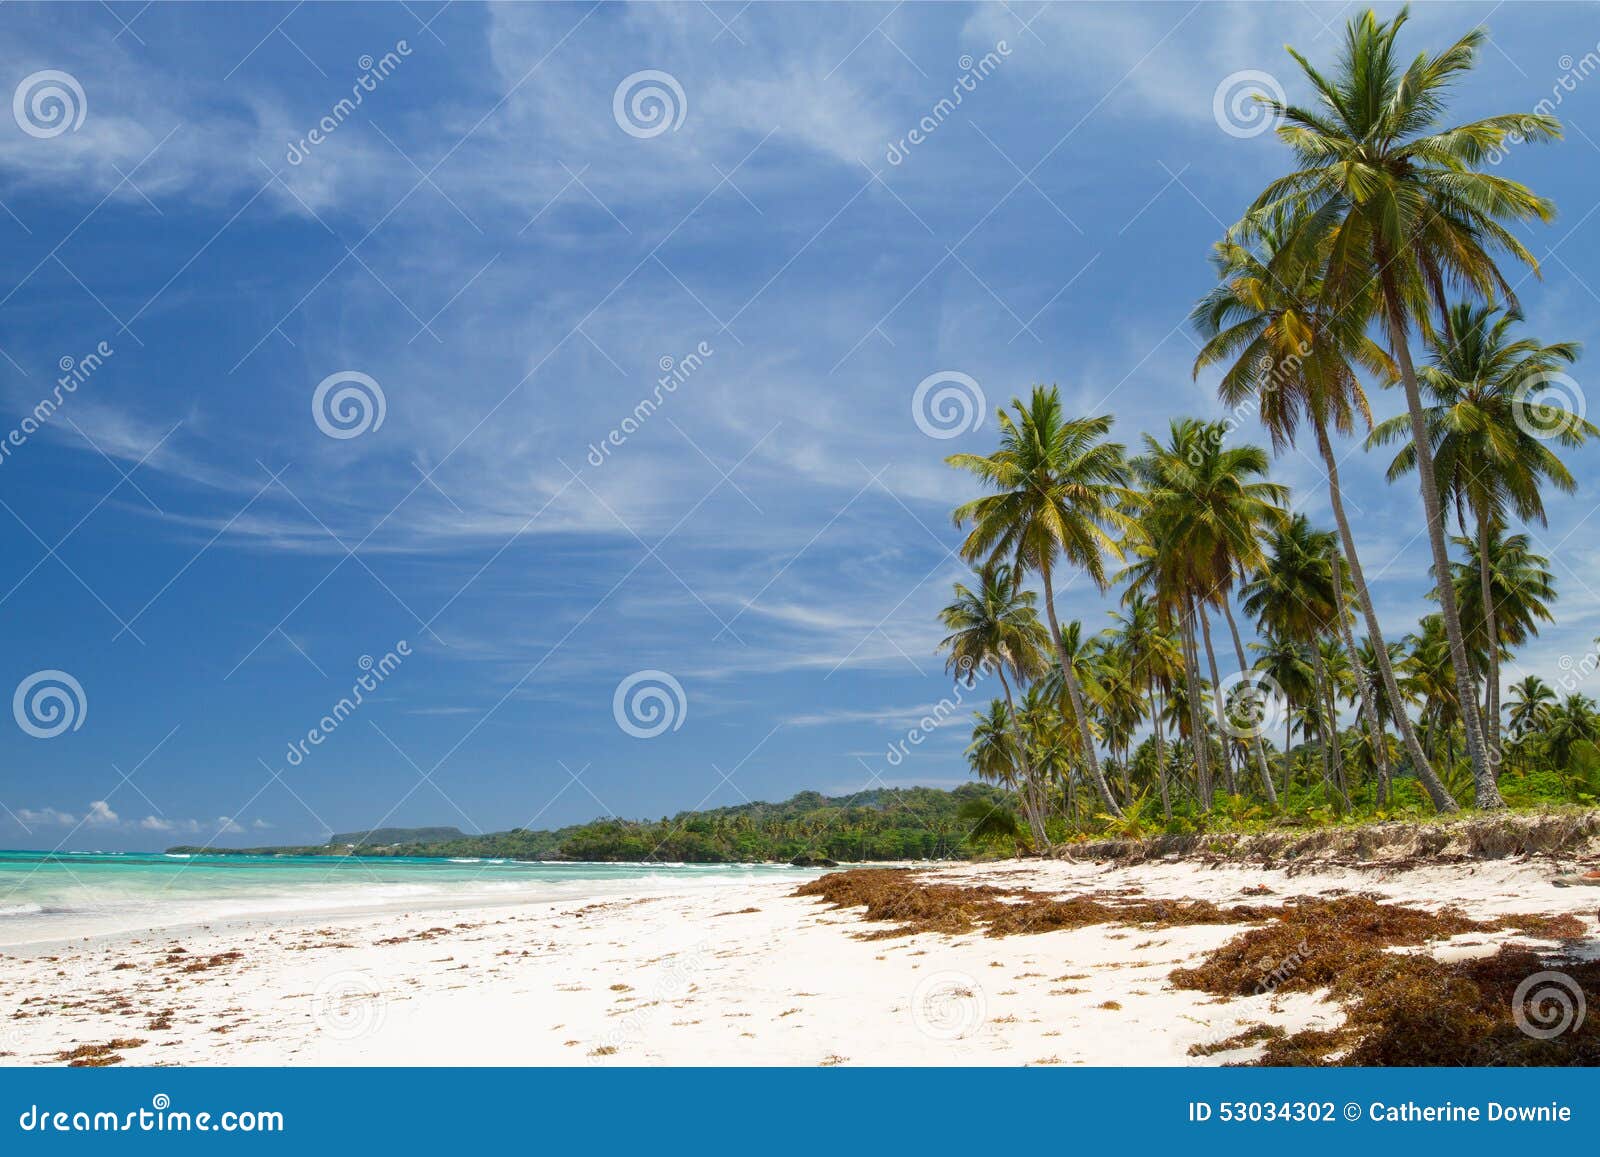 playa rincon, the dominican republic